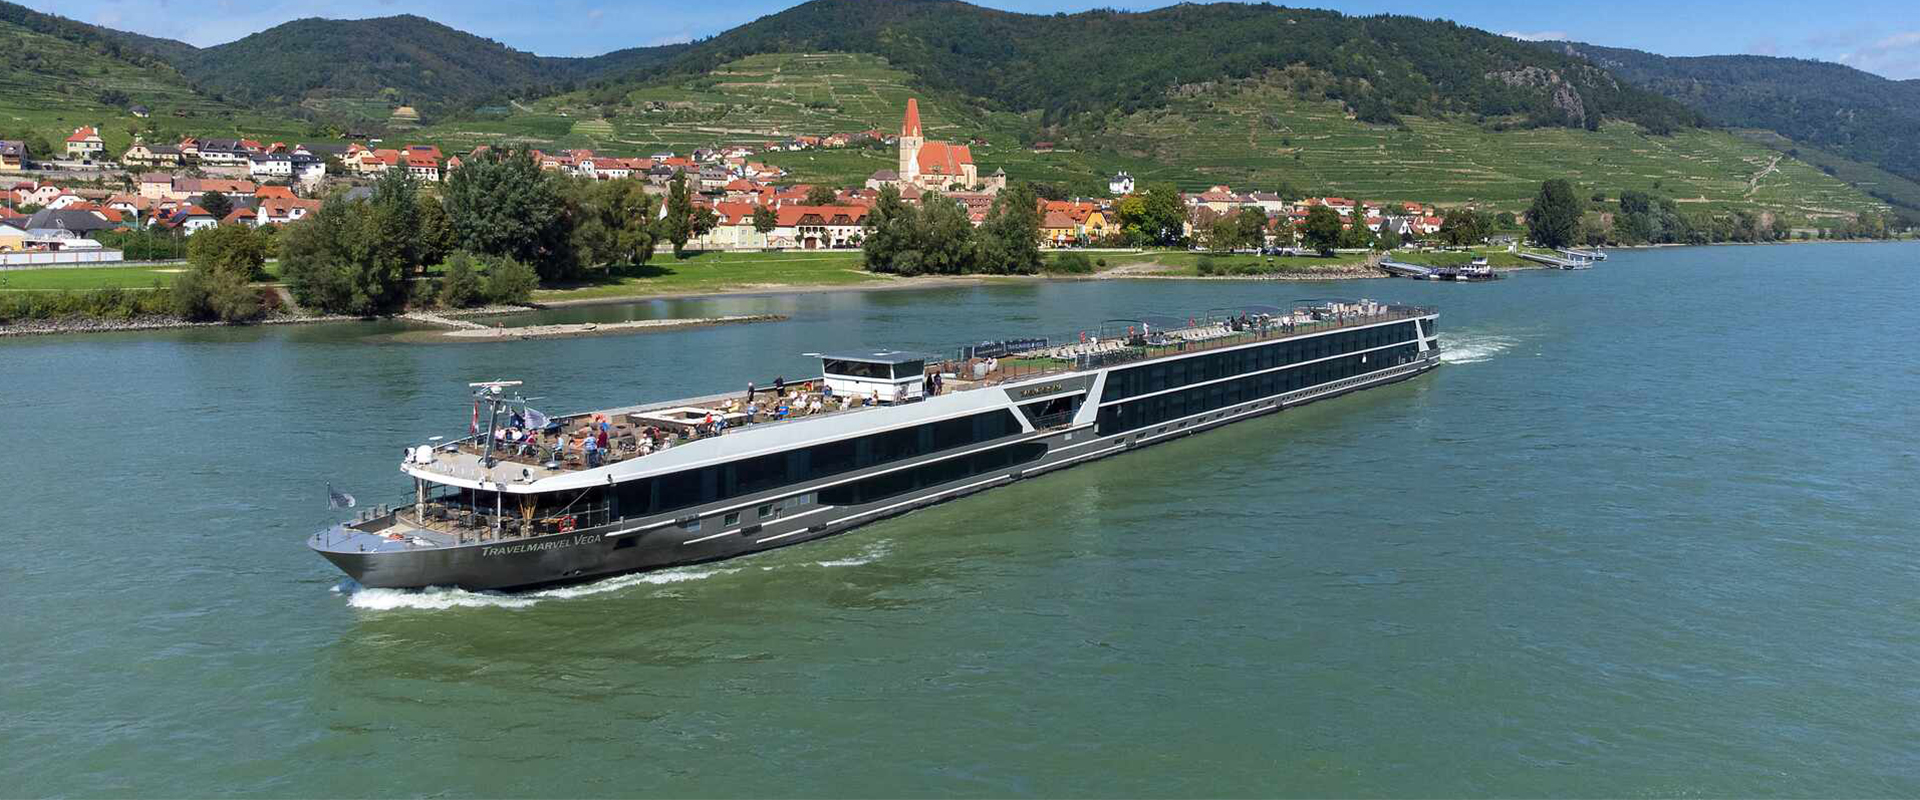 travelmarvel river cruise europe